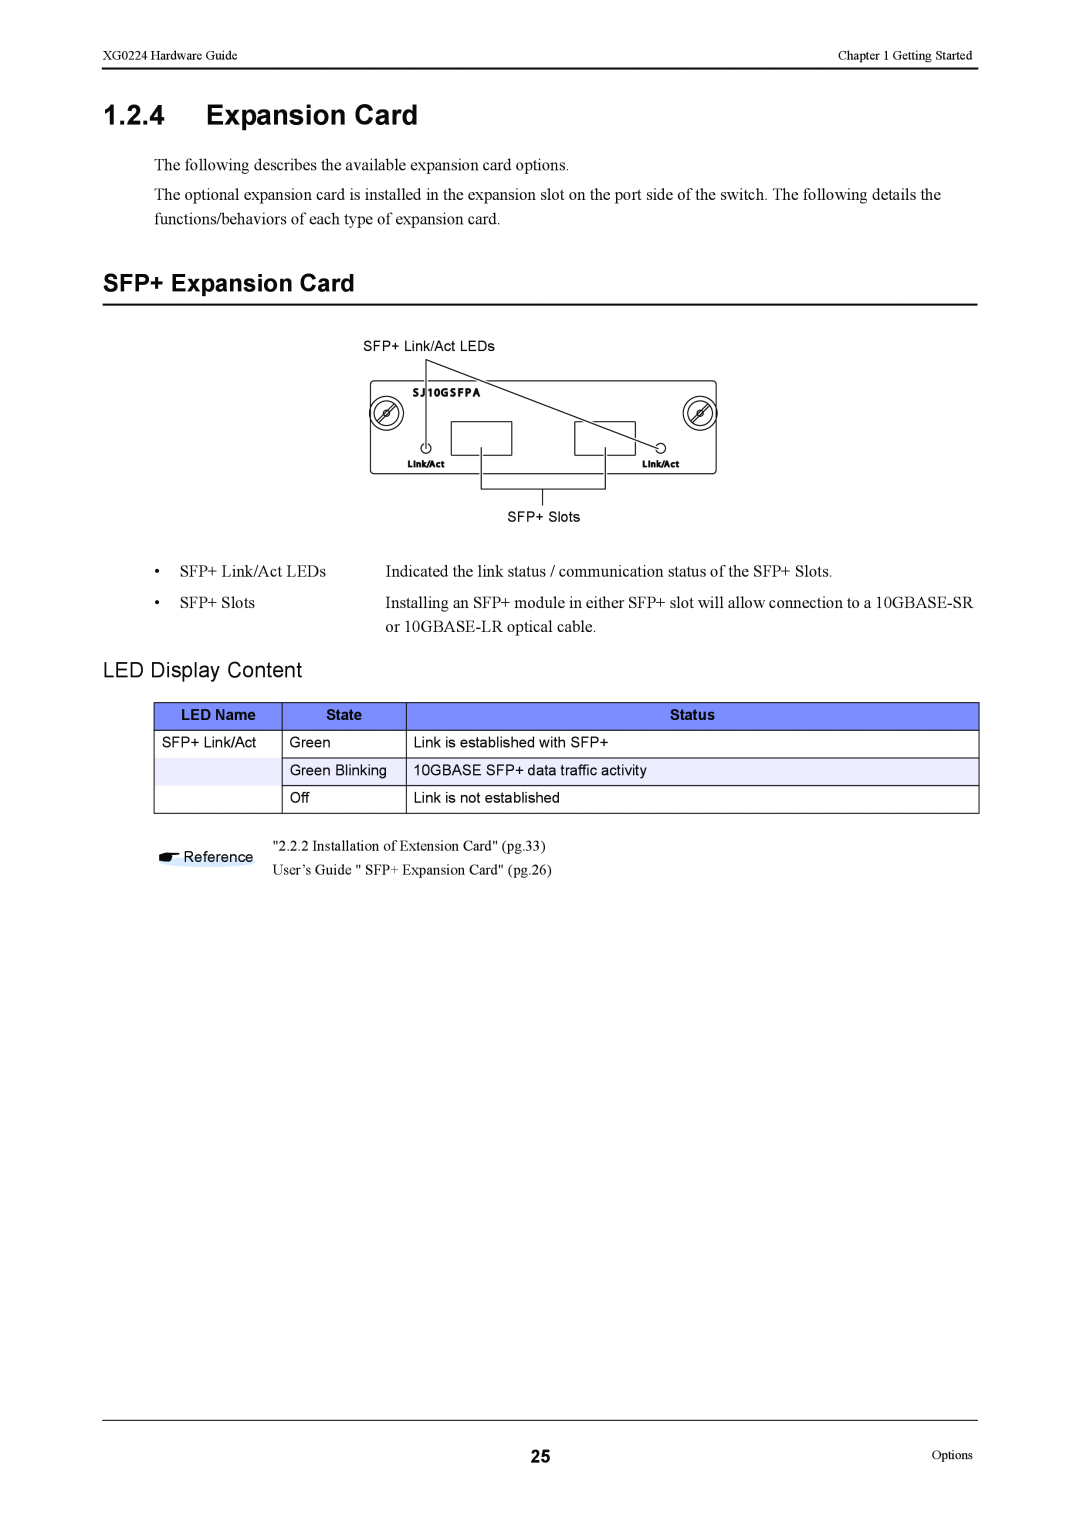 Fujitsu XG0224 manual SFP+ Expansion Card, LED Display Content 